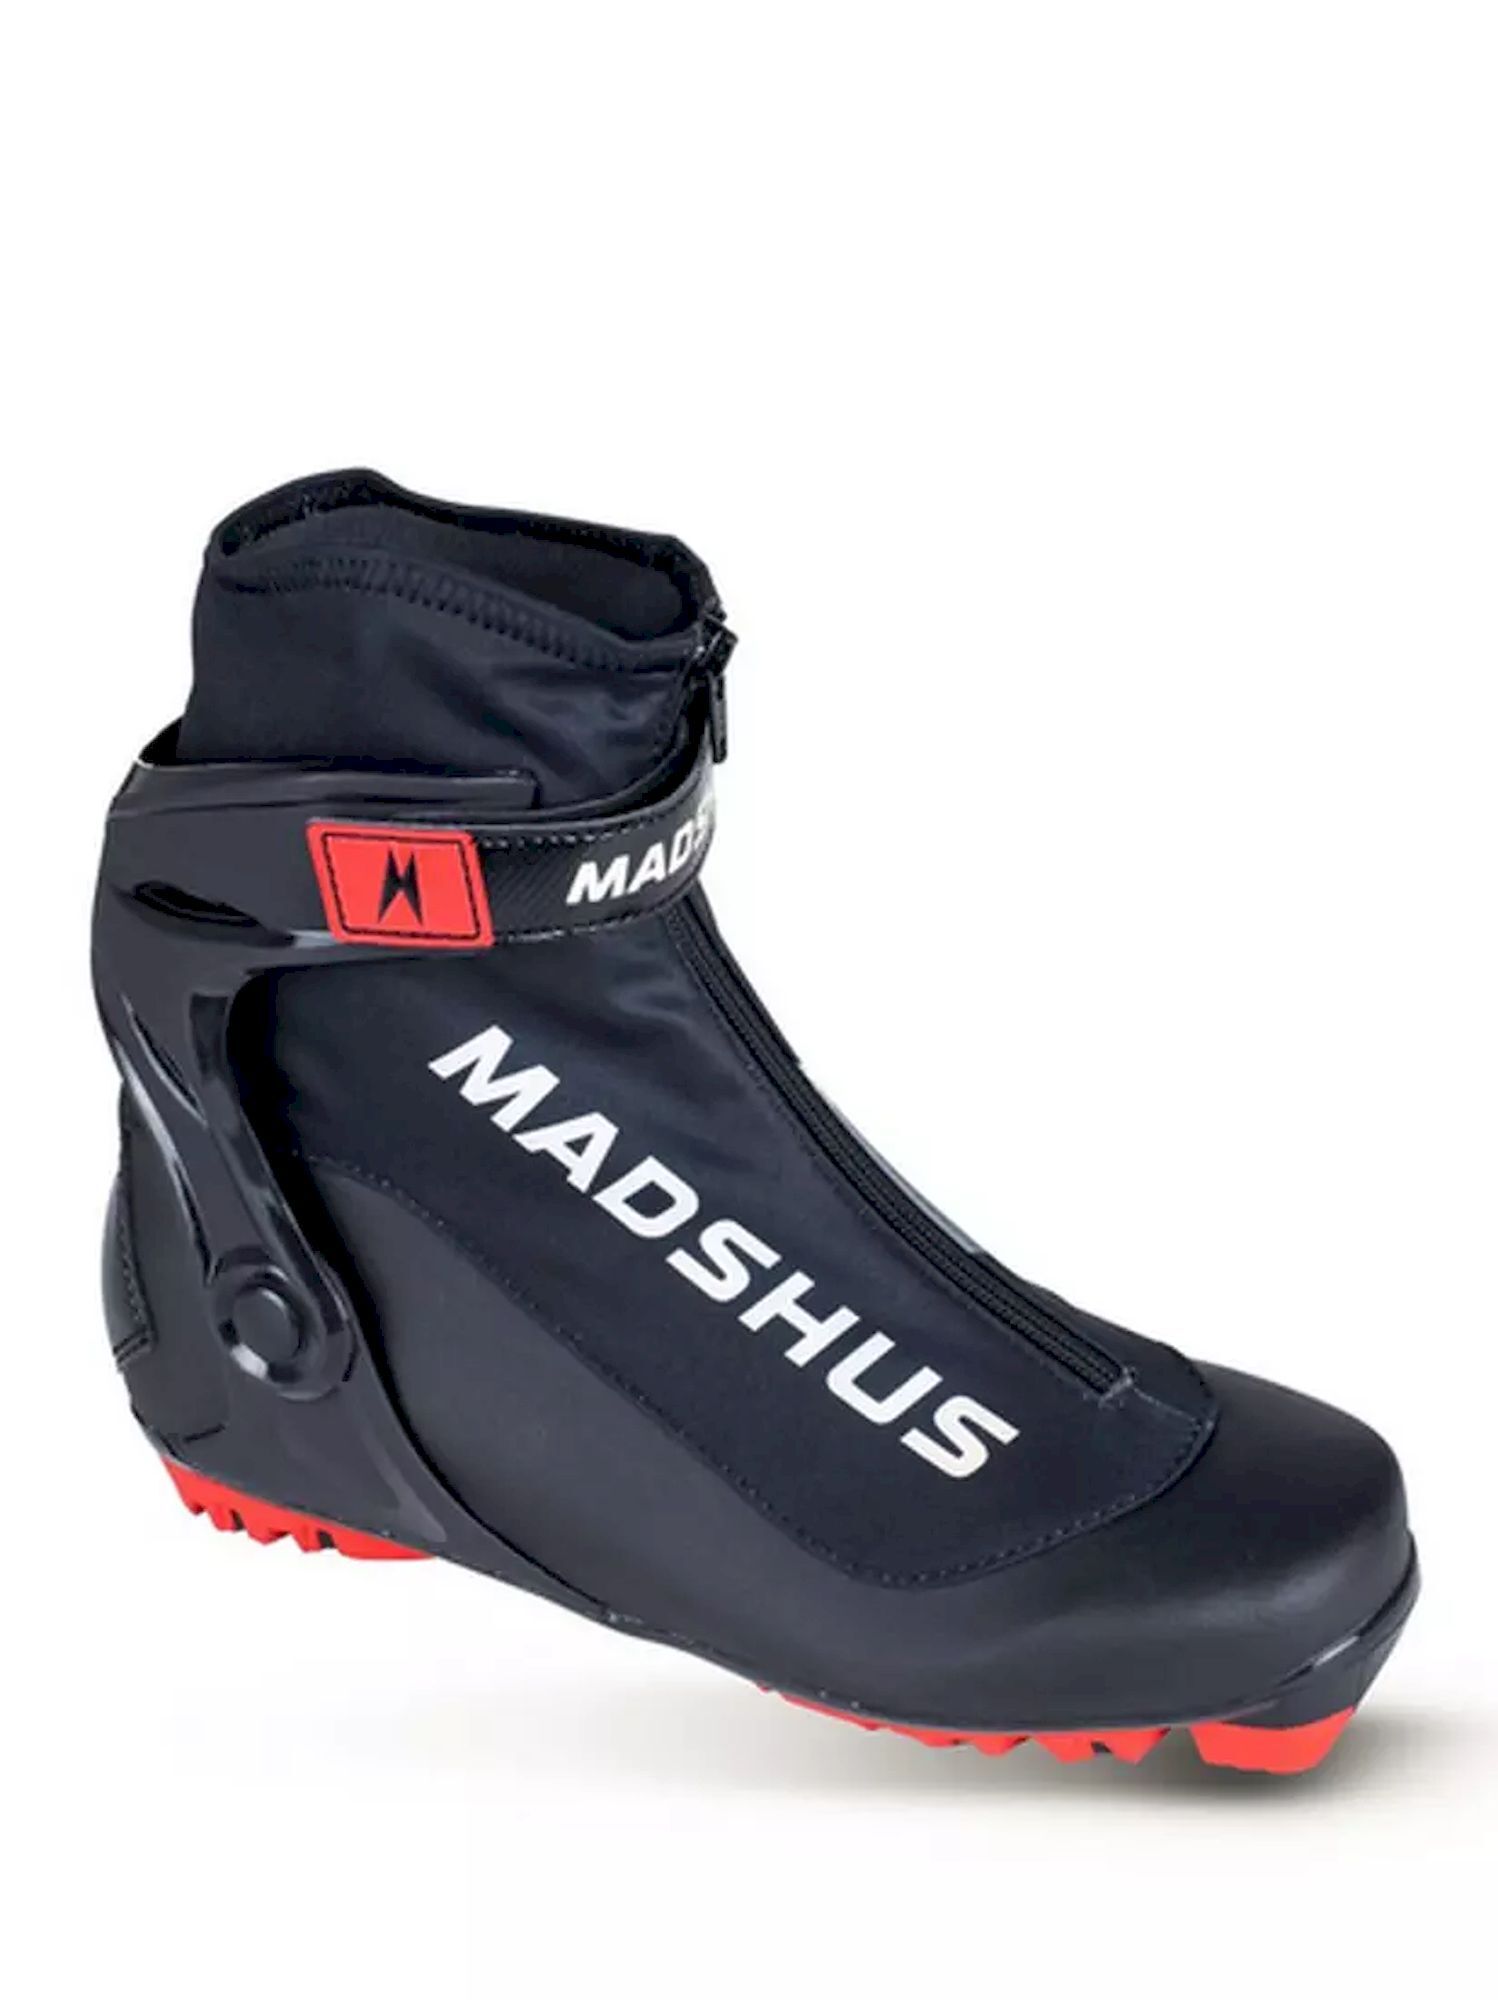 Madshus Endurace Skate - Cross-country ski boots | Hardloop